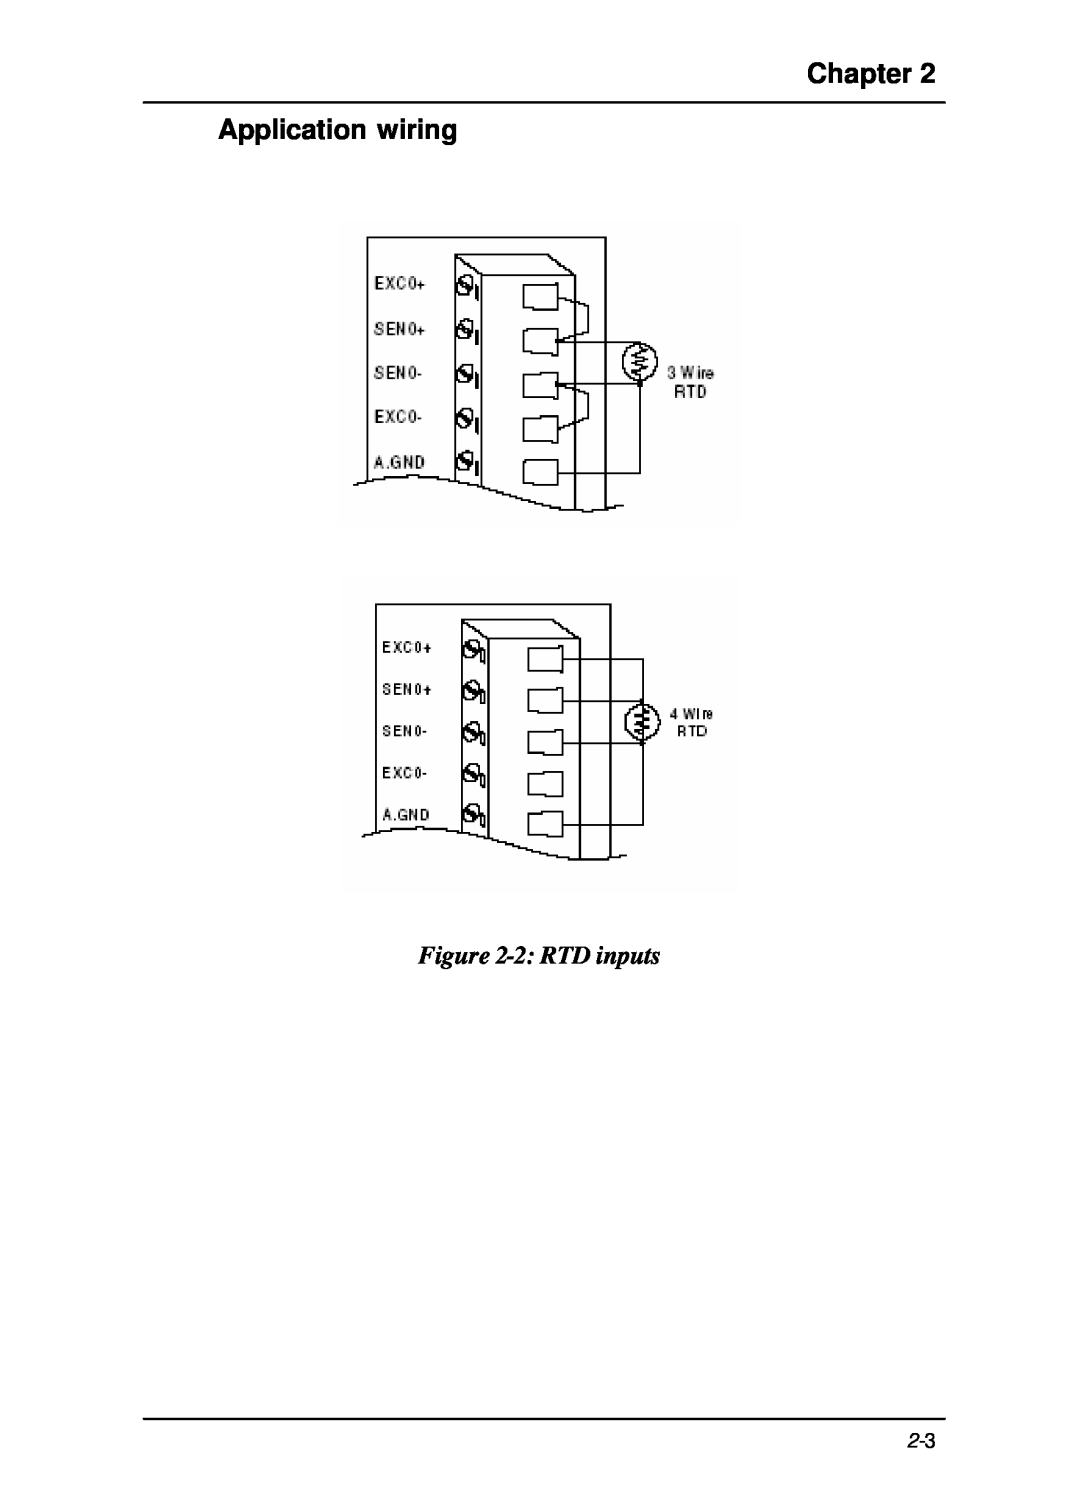 B&B Electronics 5000 Series user manual Chapter Application wiring, 2 RTD inputs 